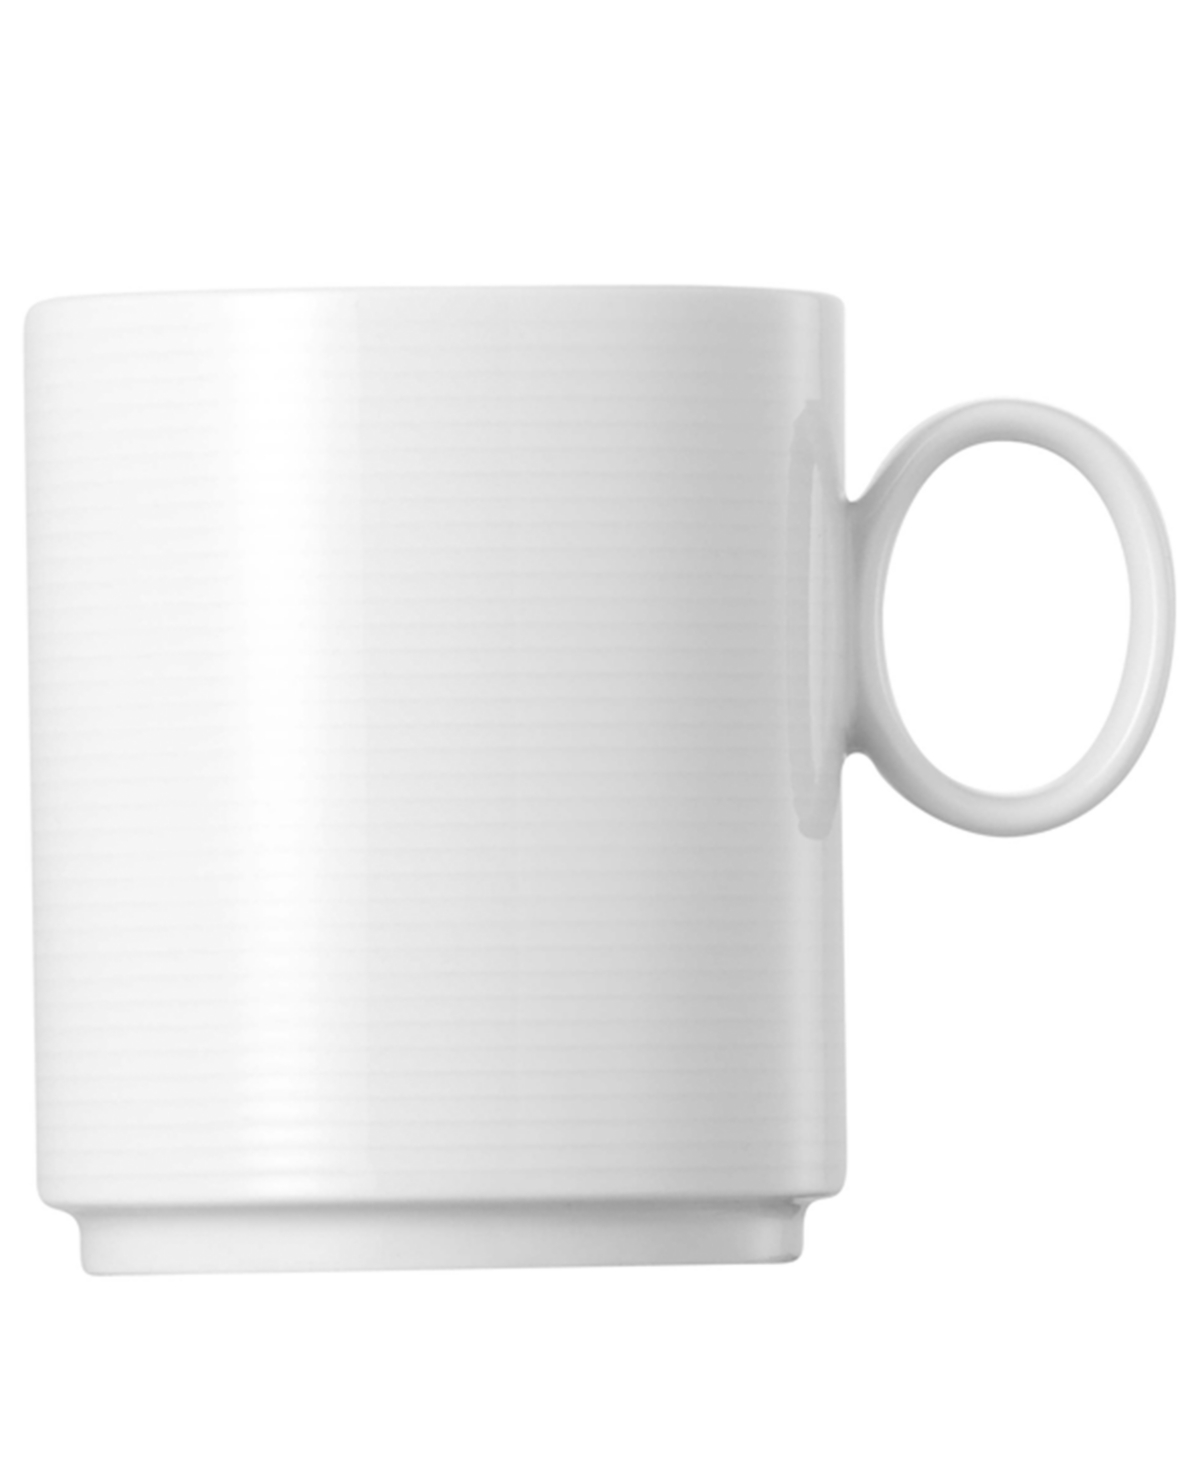 Thomas by Rosenthal Loft Large Stackable Mug - white